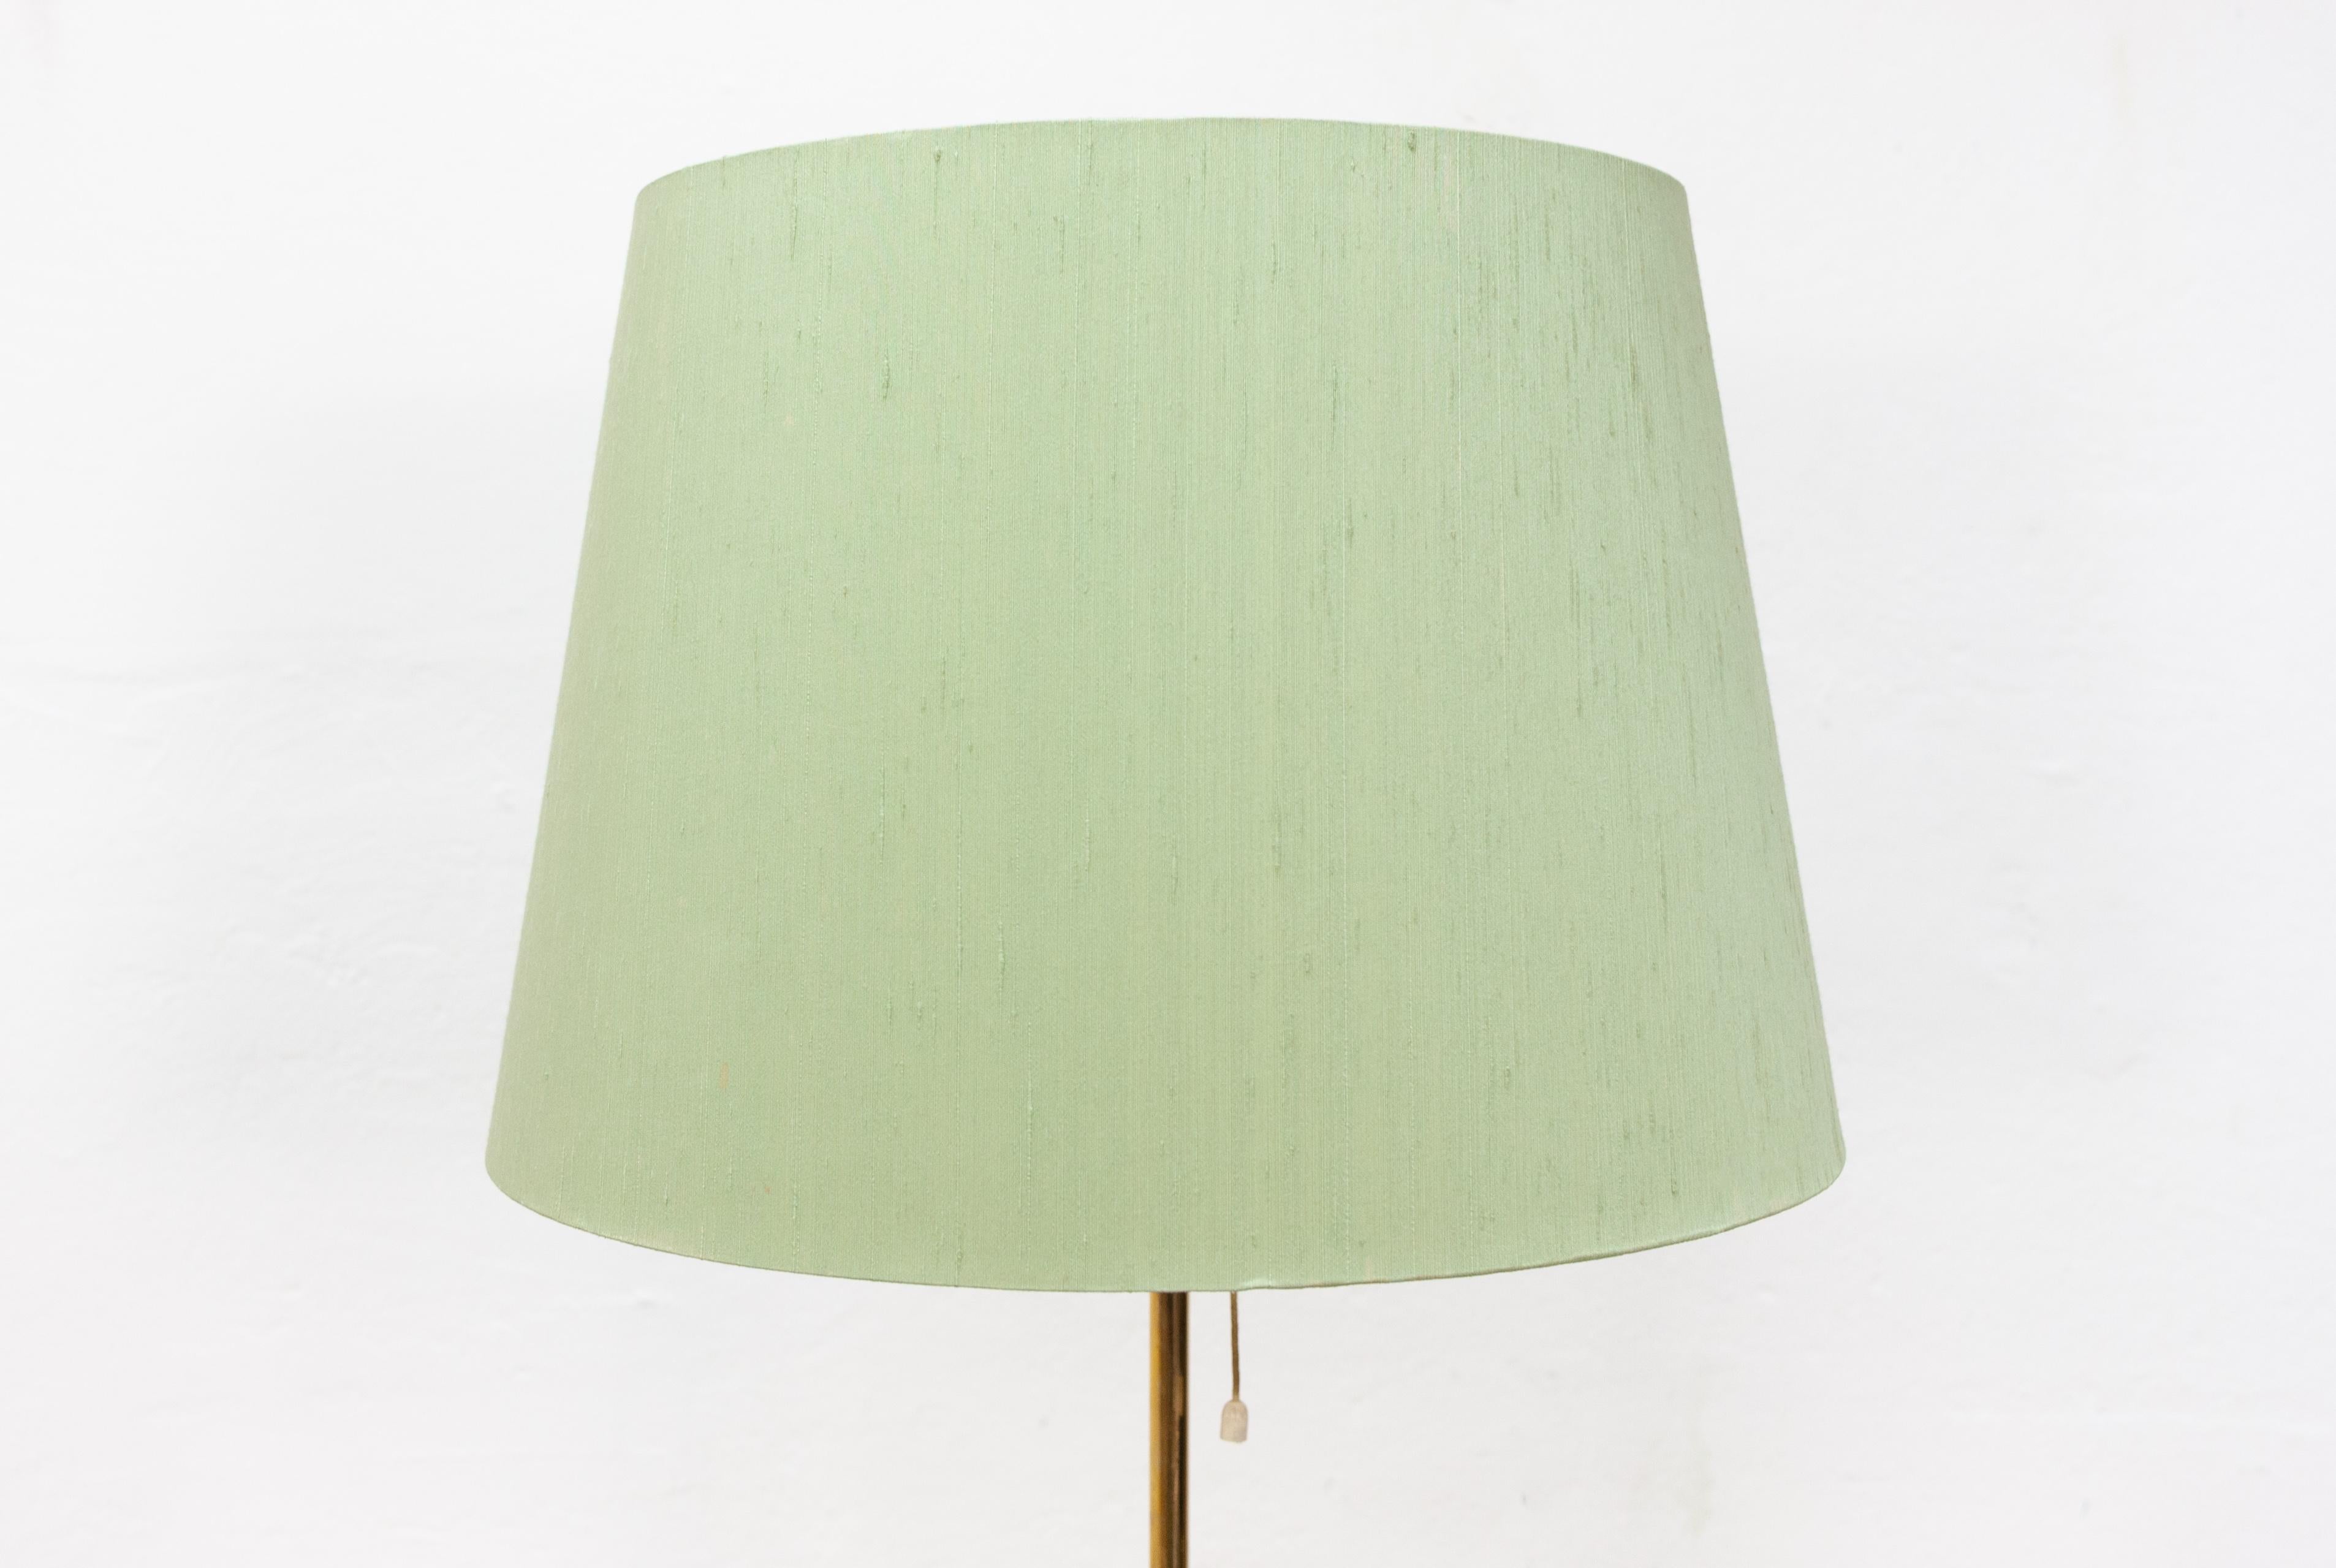 Bergbom B-024 Table Lamp with Green Shade, 1950s 2